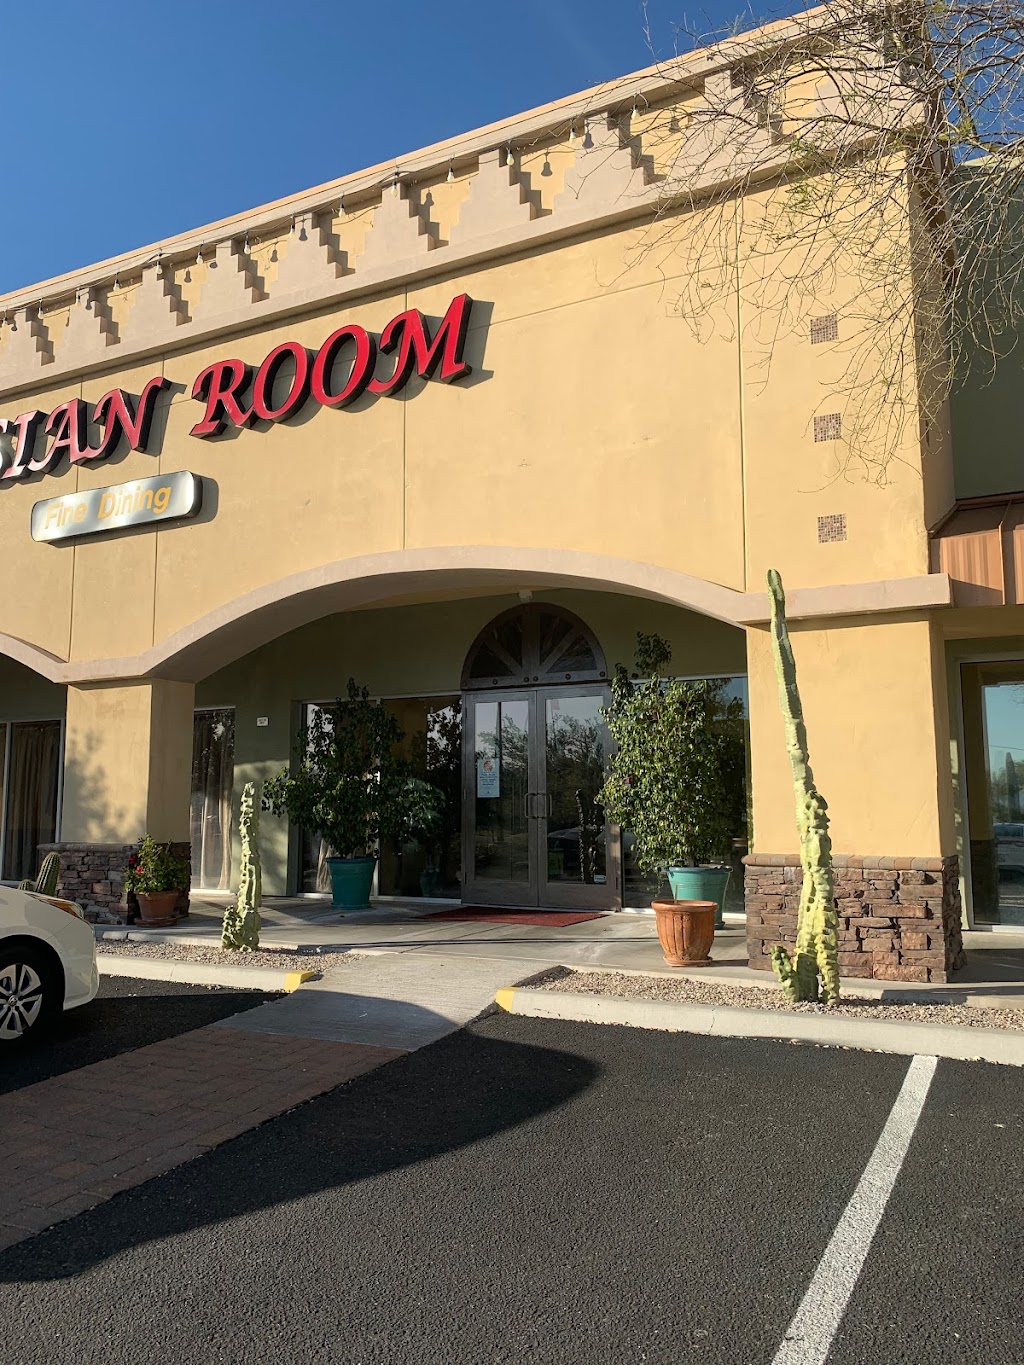 Persian Room Fine Dining | 9290 N Thornydale Rd, Tucson, AZ 85742, USA | Phone: (520) 744-1414